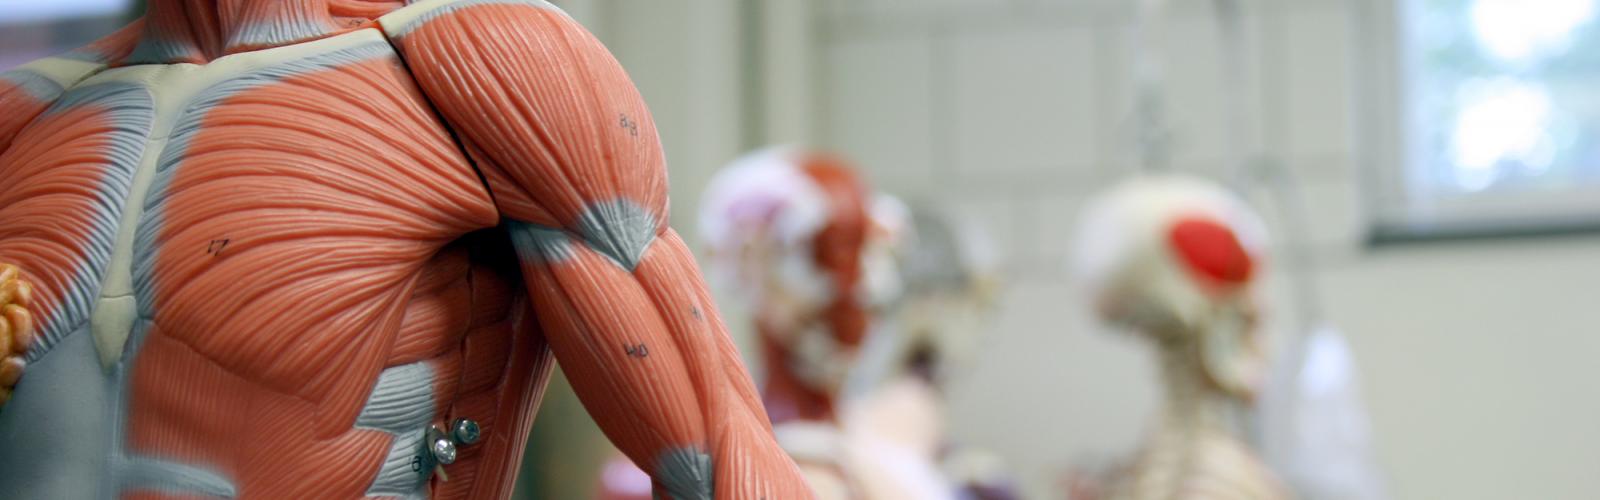 Human Arm and Torso of an Anatomical Model 